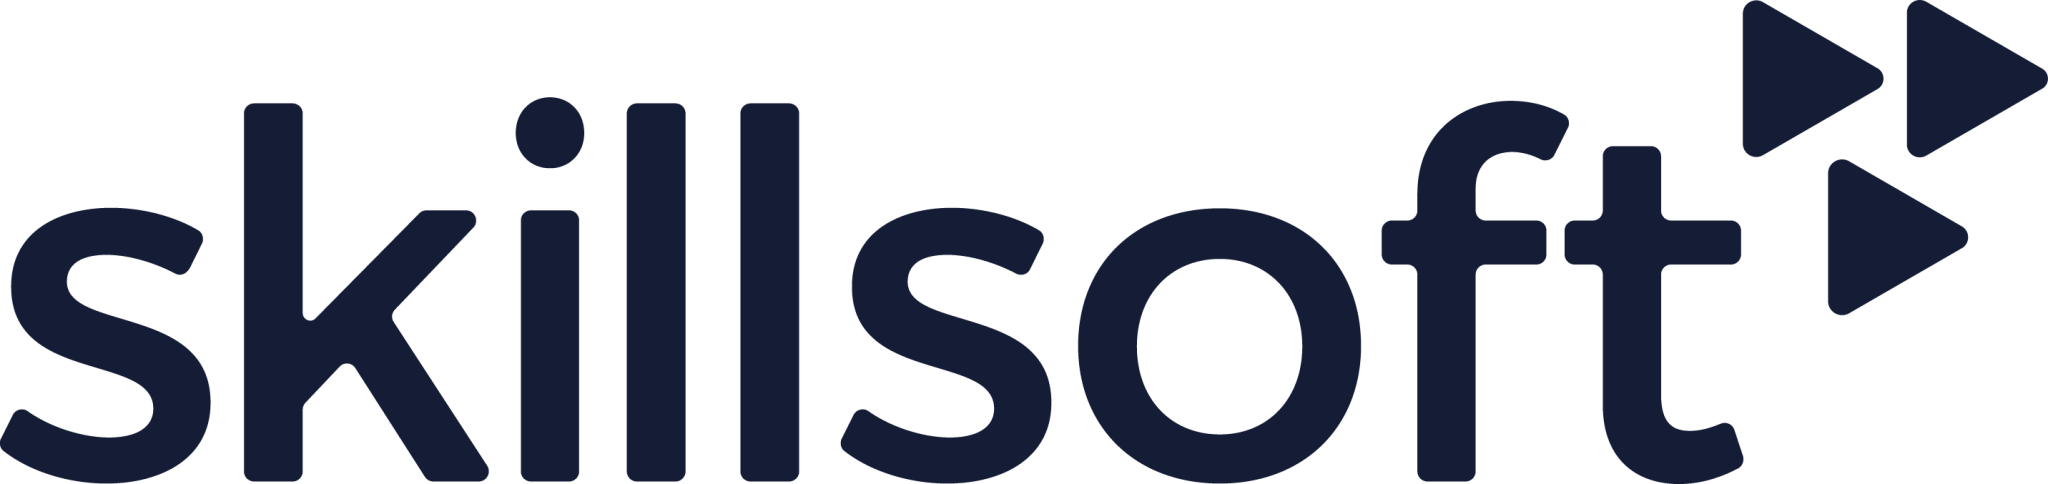 image of the Skillsoft logo